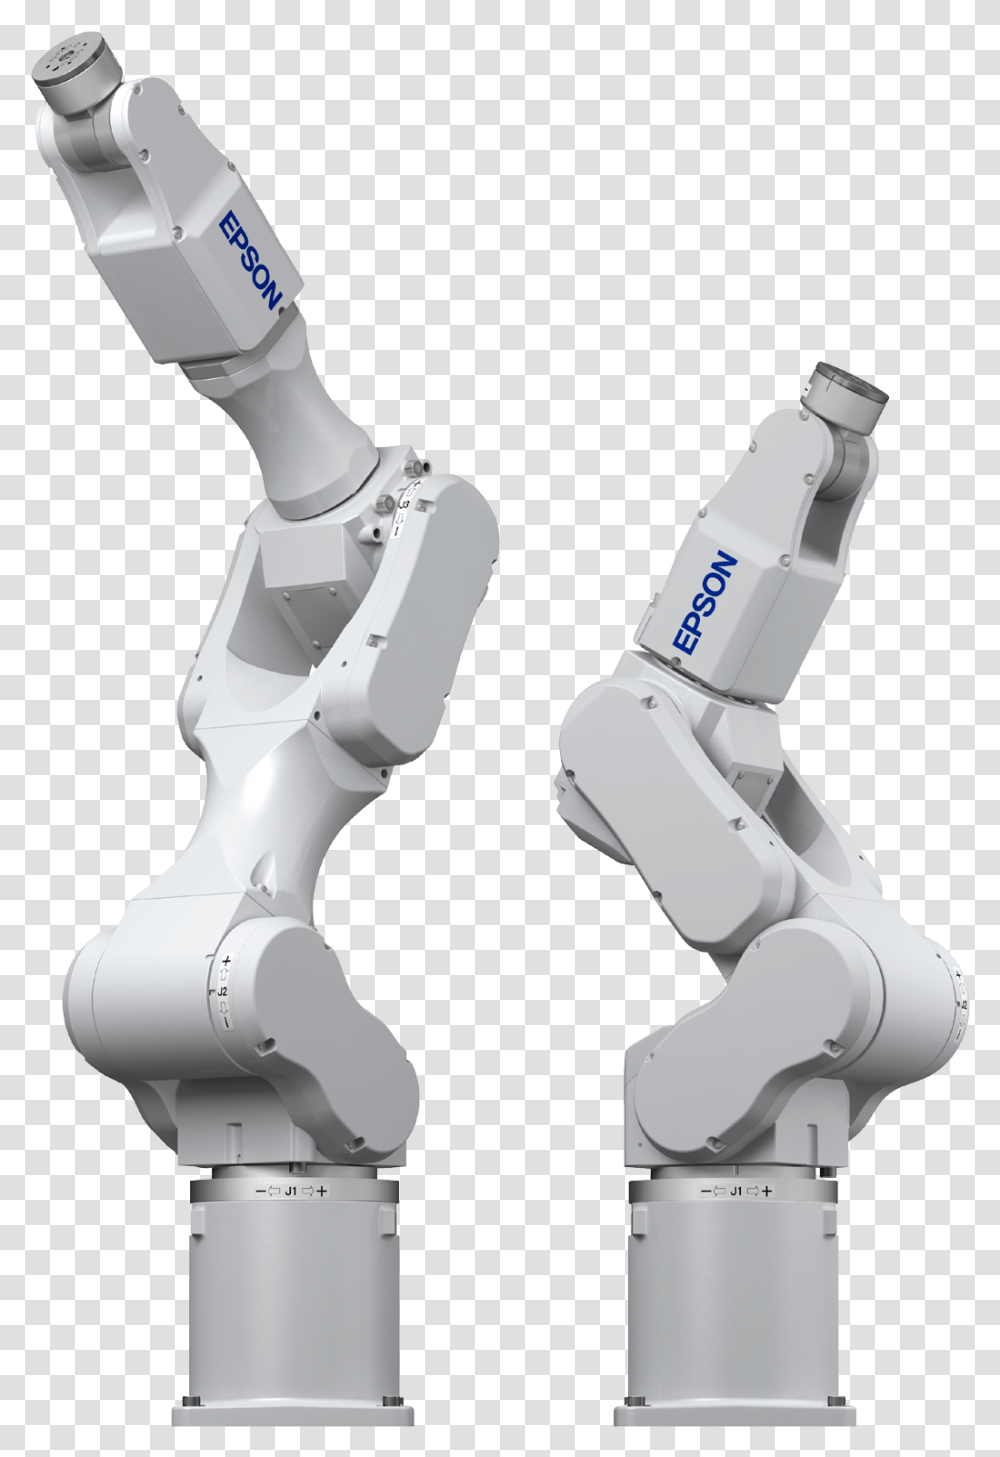 Robot Hand Download Iai 6 Axis Robot, Power Drill, Tool Transparent Png